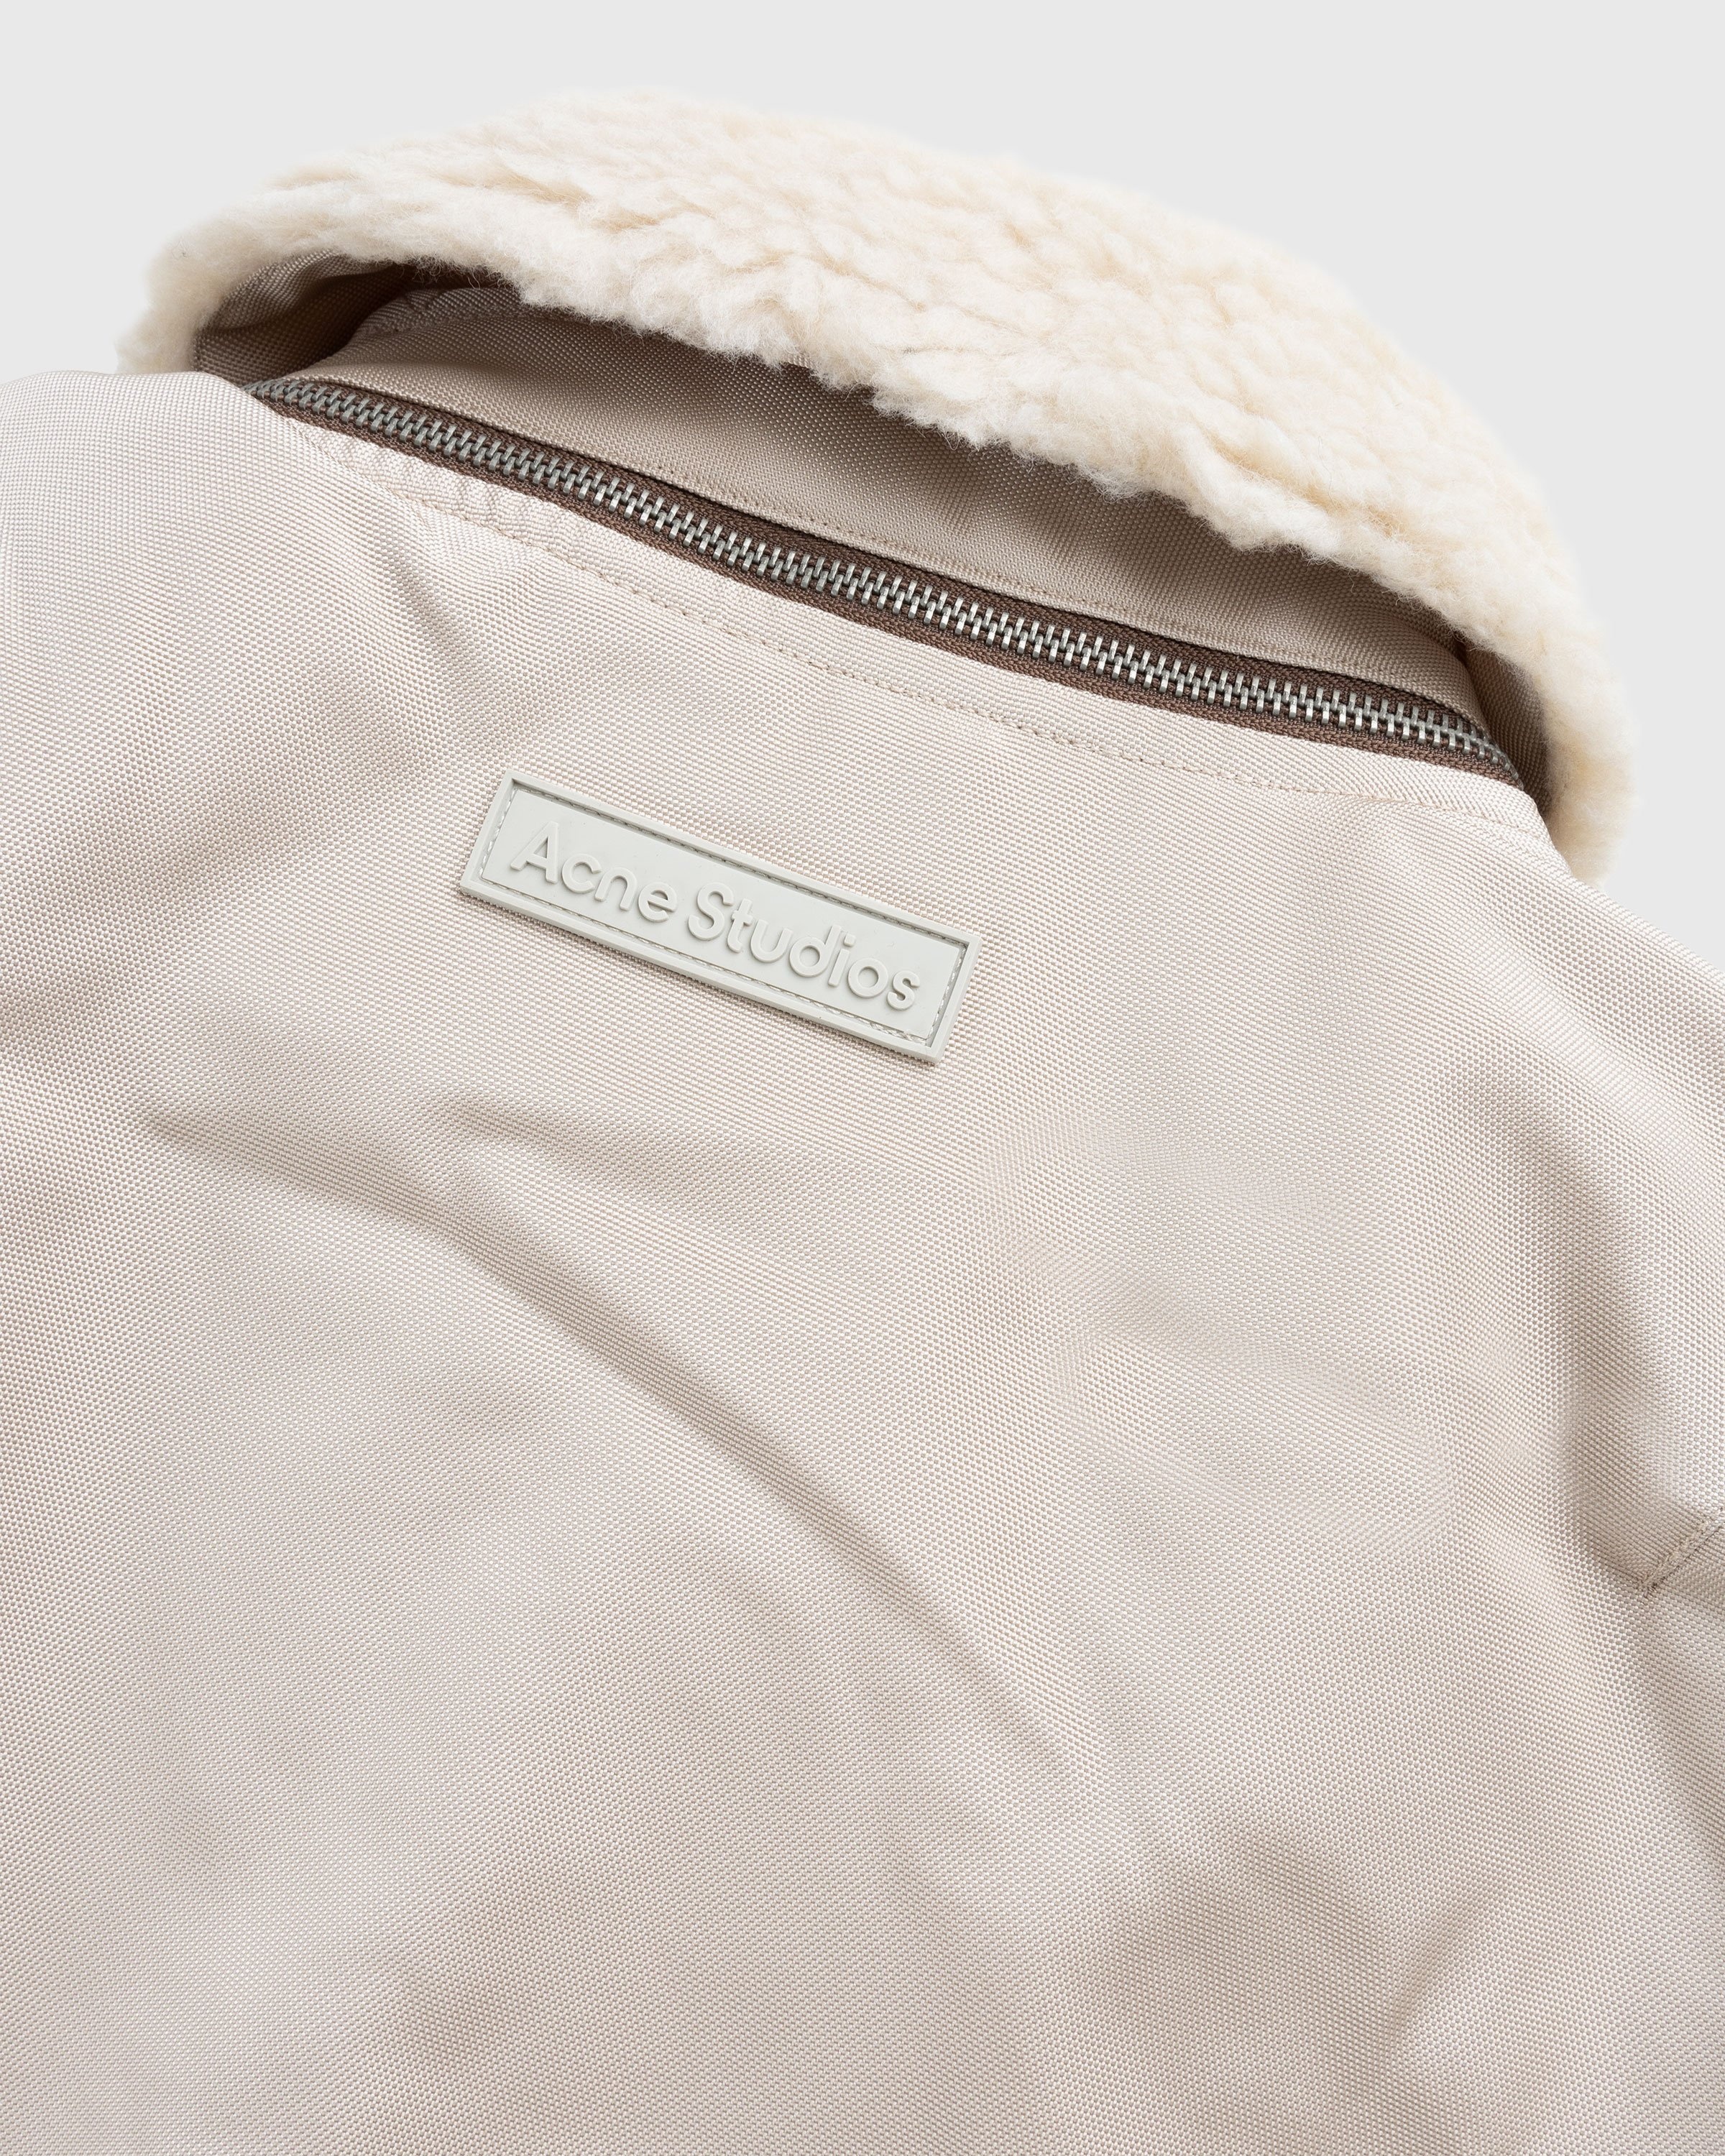 Acne Studios – Shearling Collar Jacket Beige - Outerwear - Beige - Image 7